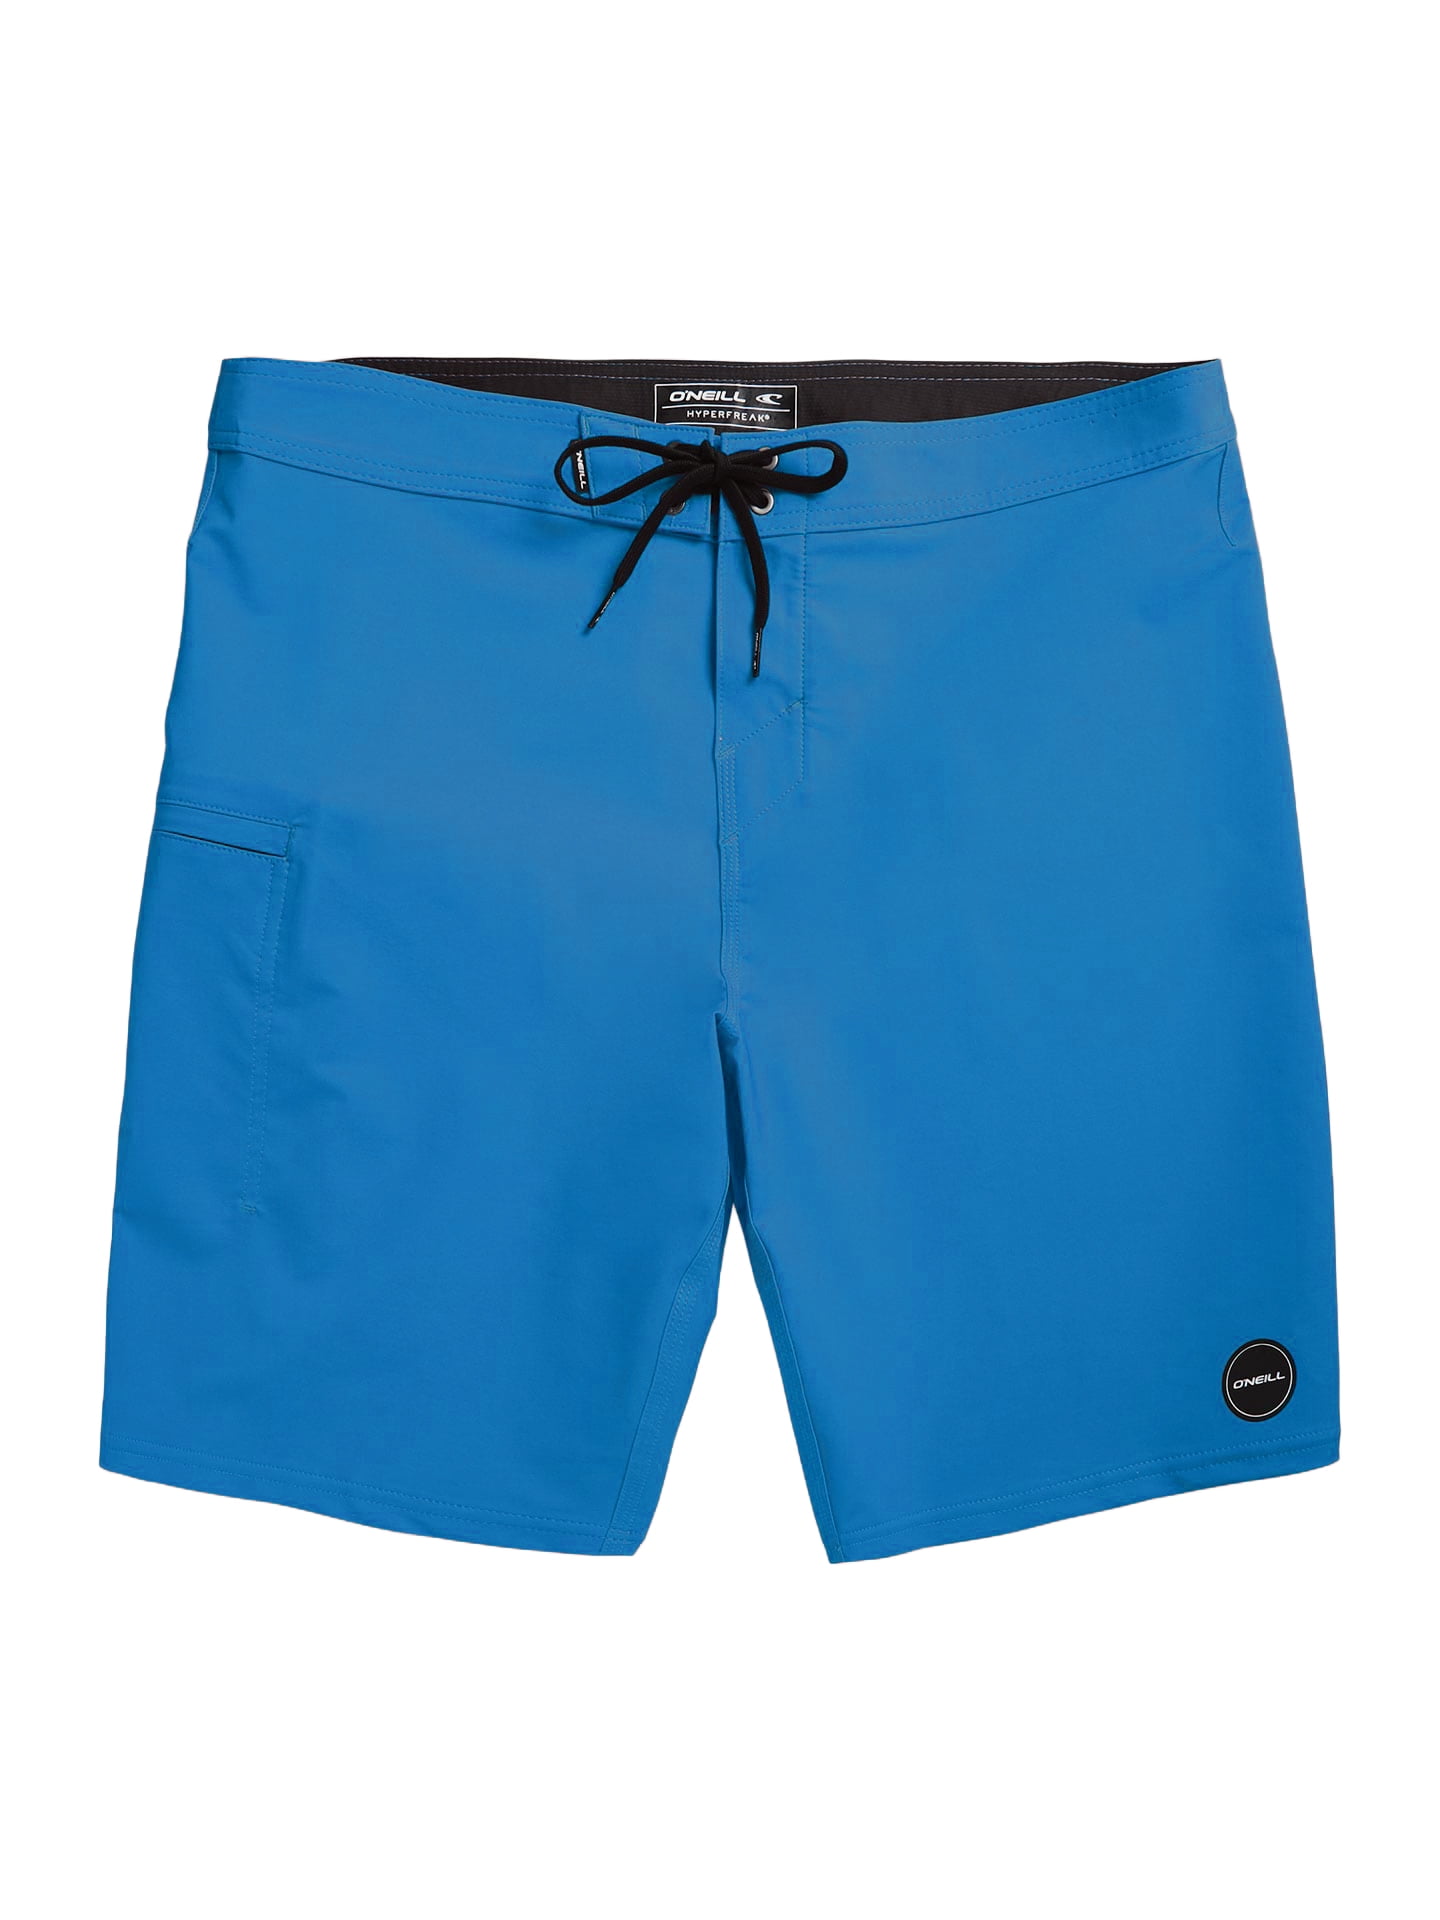 NEW ONEILL board shorts swim HYPERFREAK royal blue 30 32 36 38 